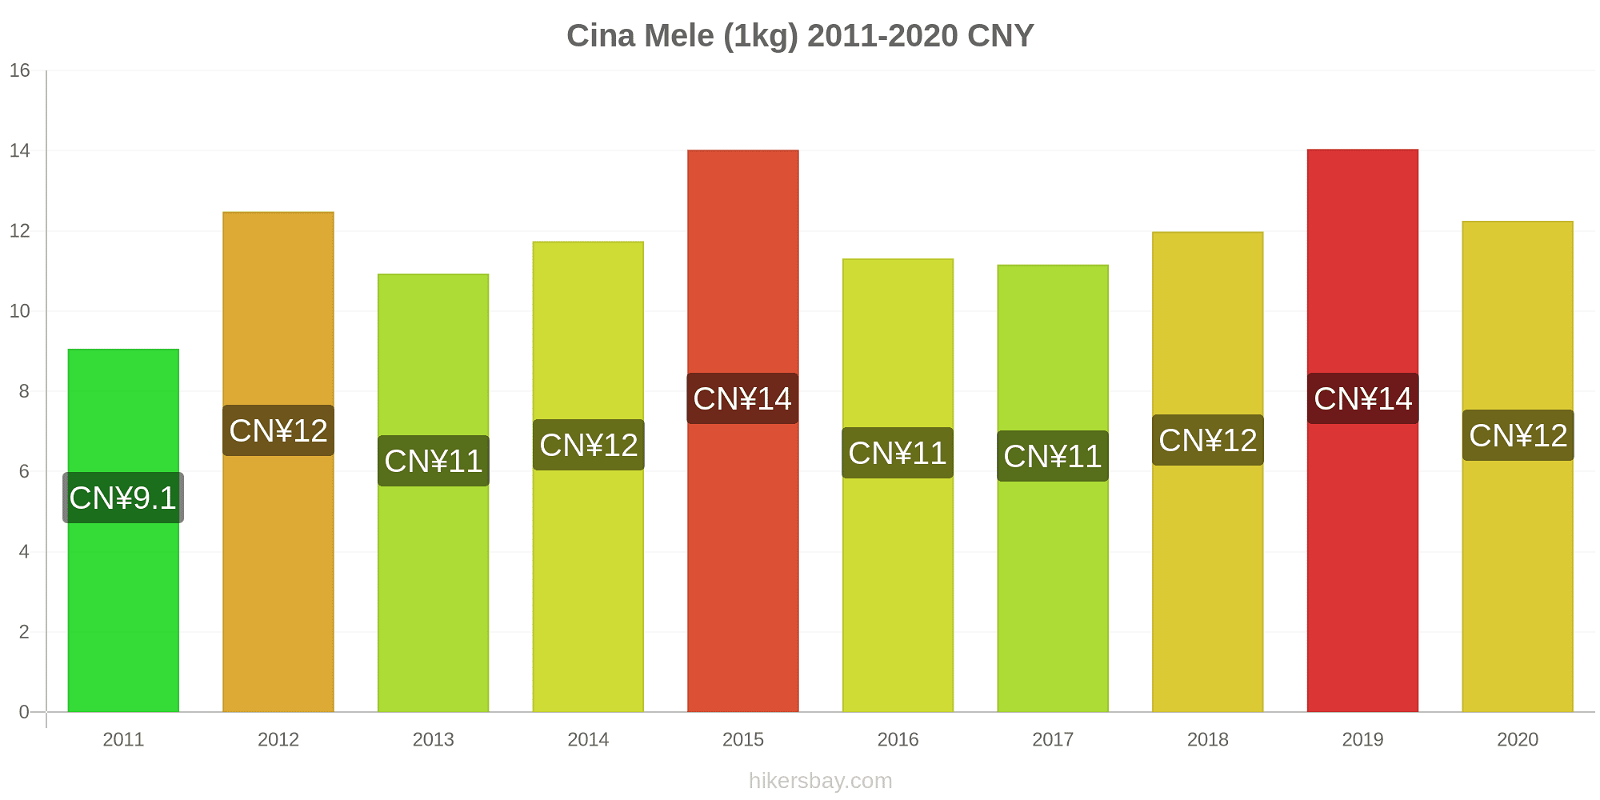 Cina variazioni di prezzo Mele (1kg) hikersbay.com